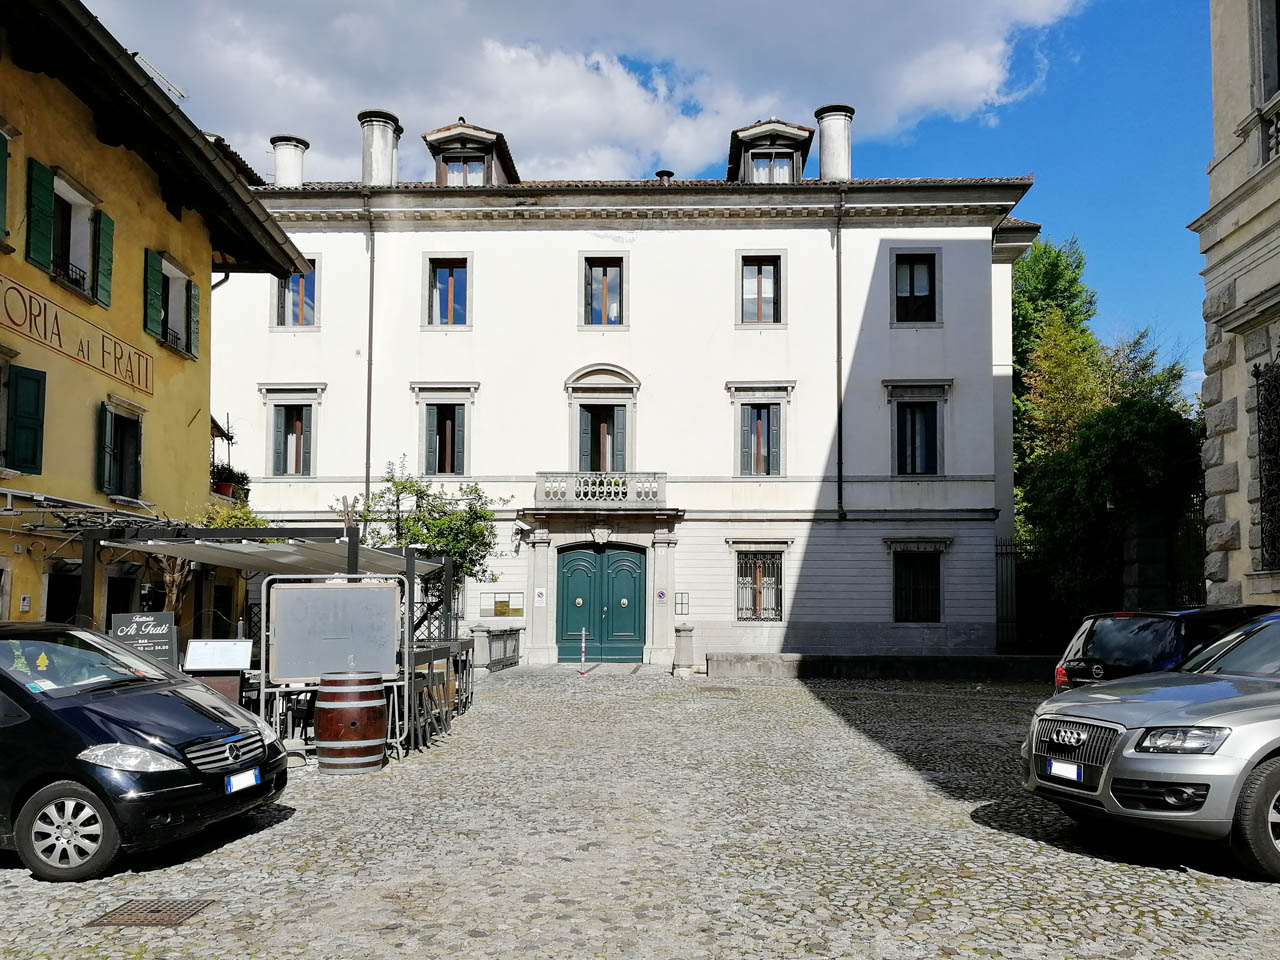 Palazzo de Brandis (palazzo, borghese) - Udine (UD) 